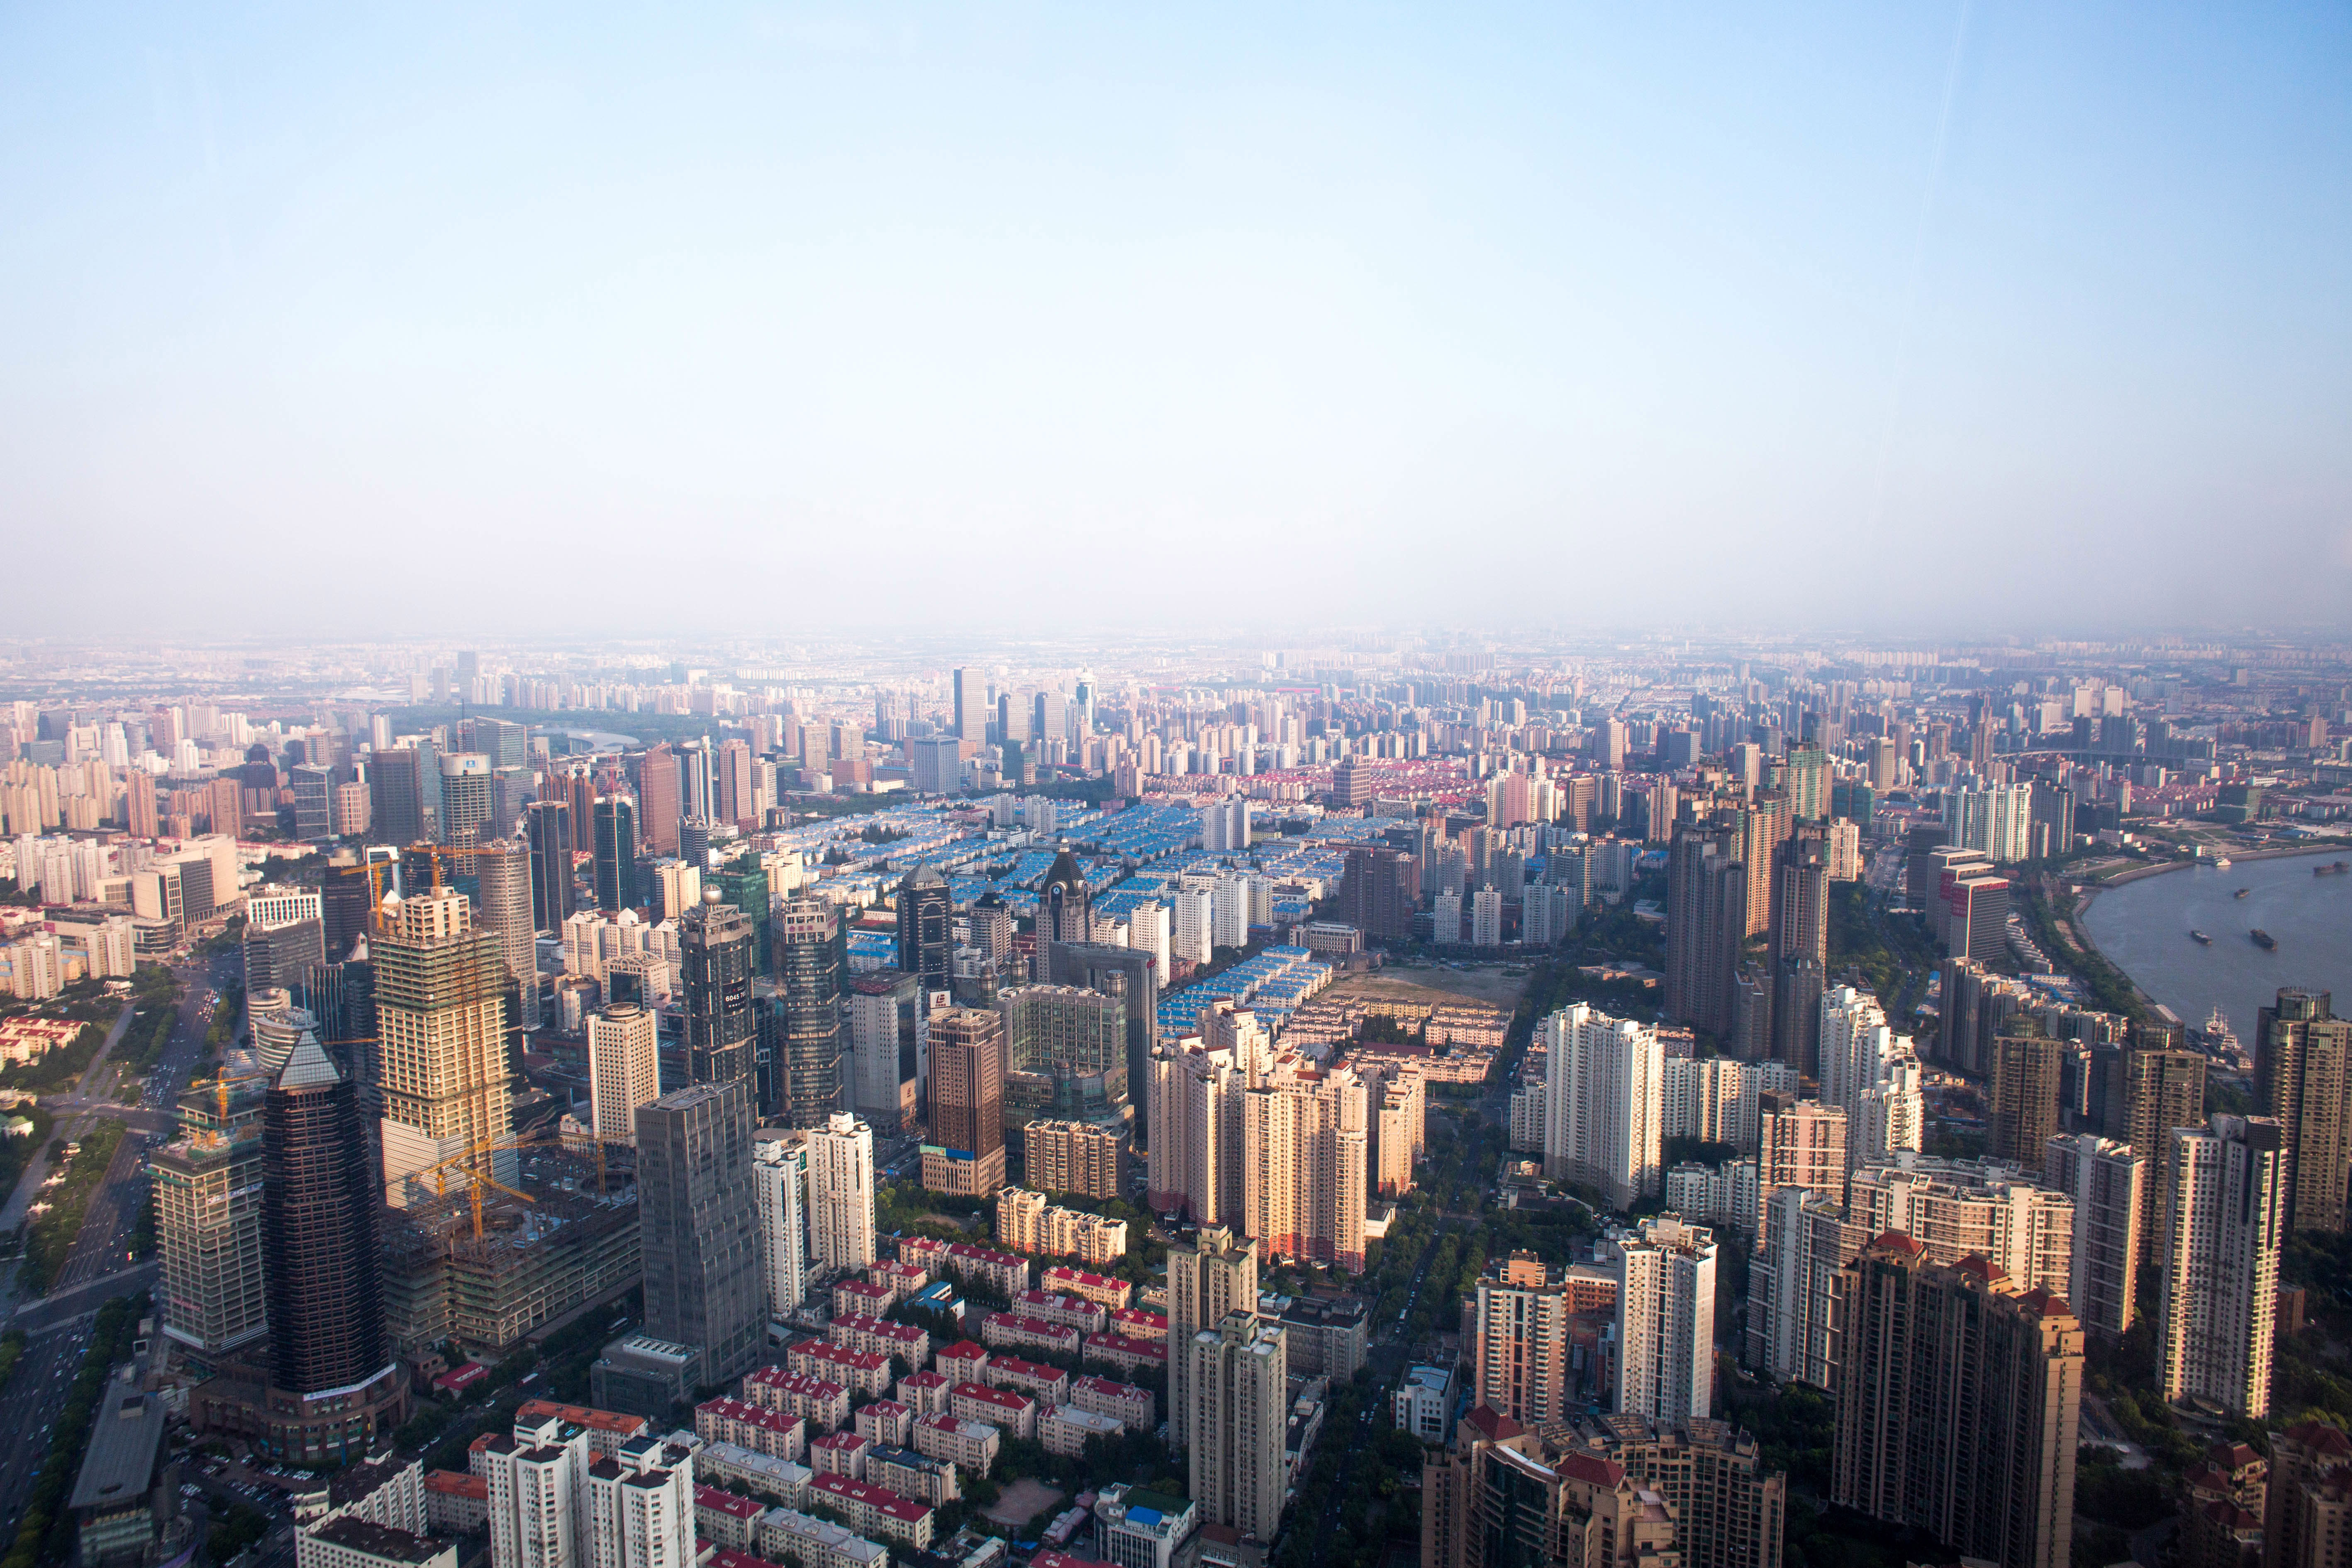 Overlook of Shanghai Real Estate